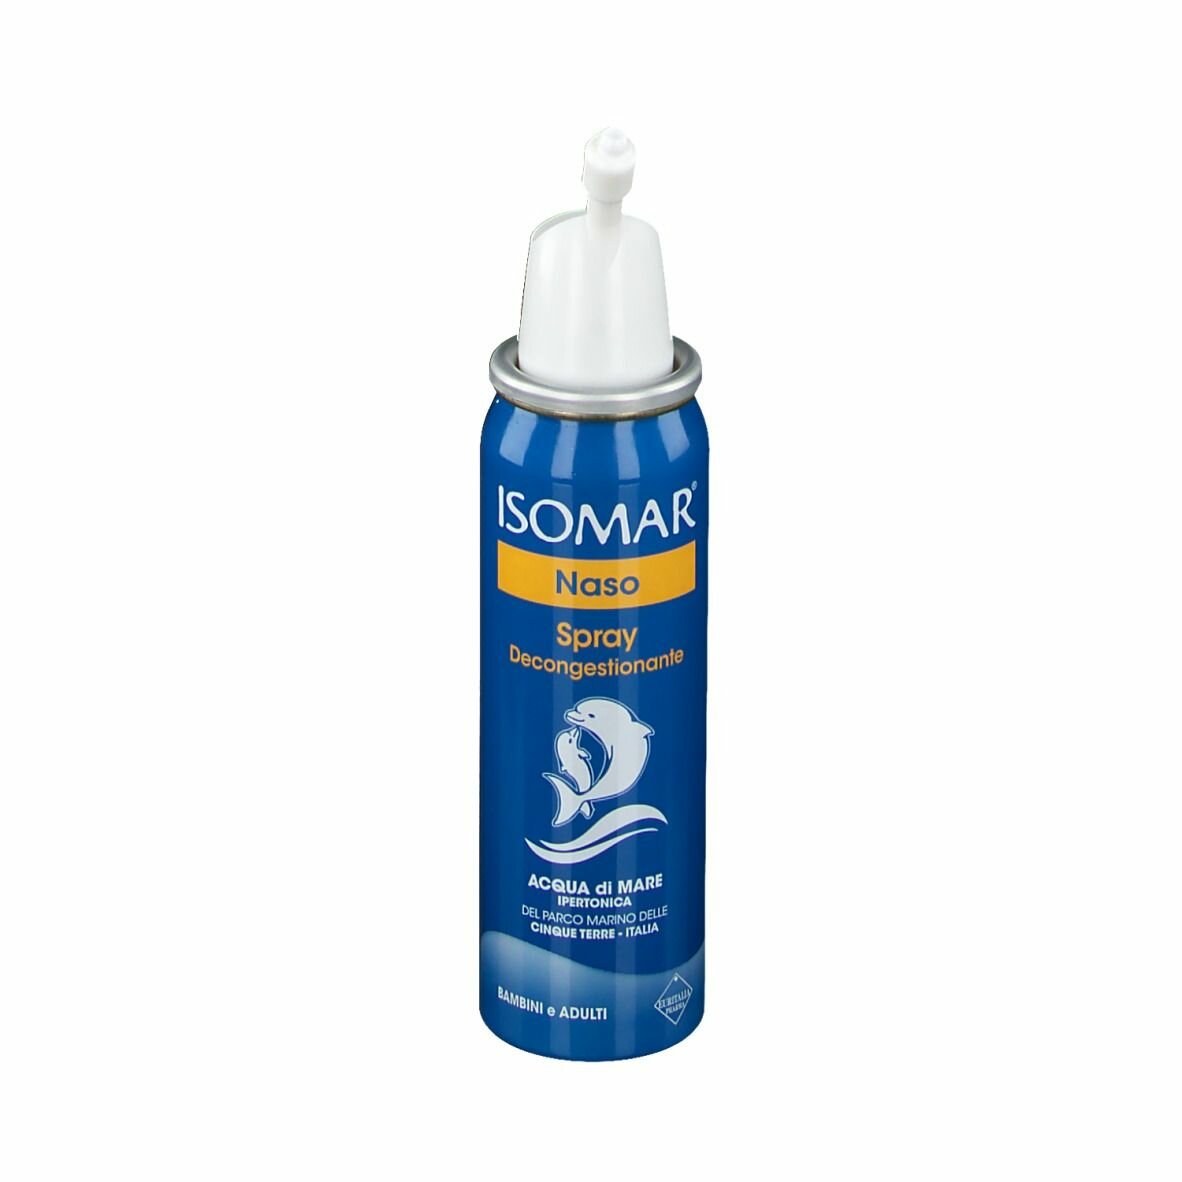 Isomar spray decongestionante nasale 50ml img